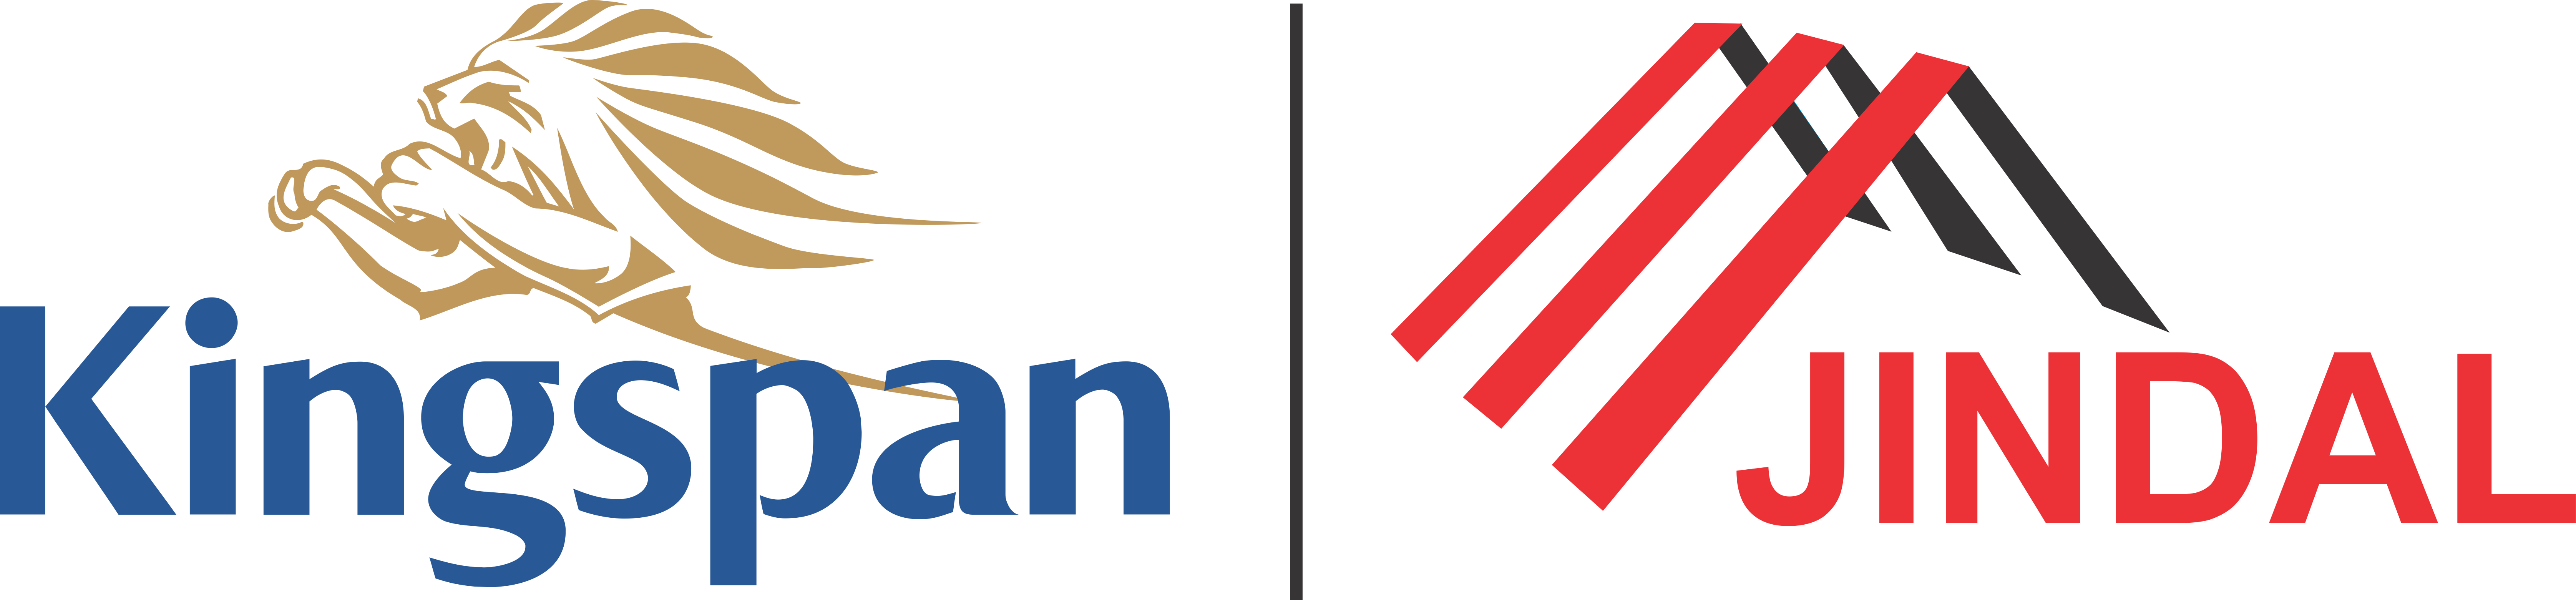 kingspan and jindal logo picture